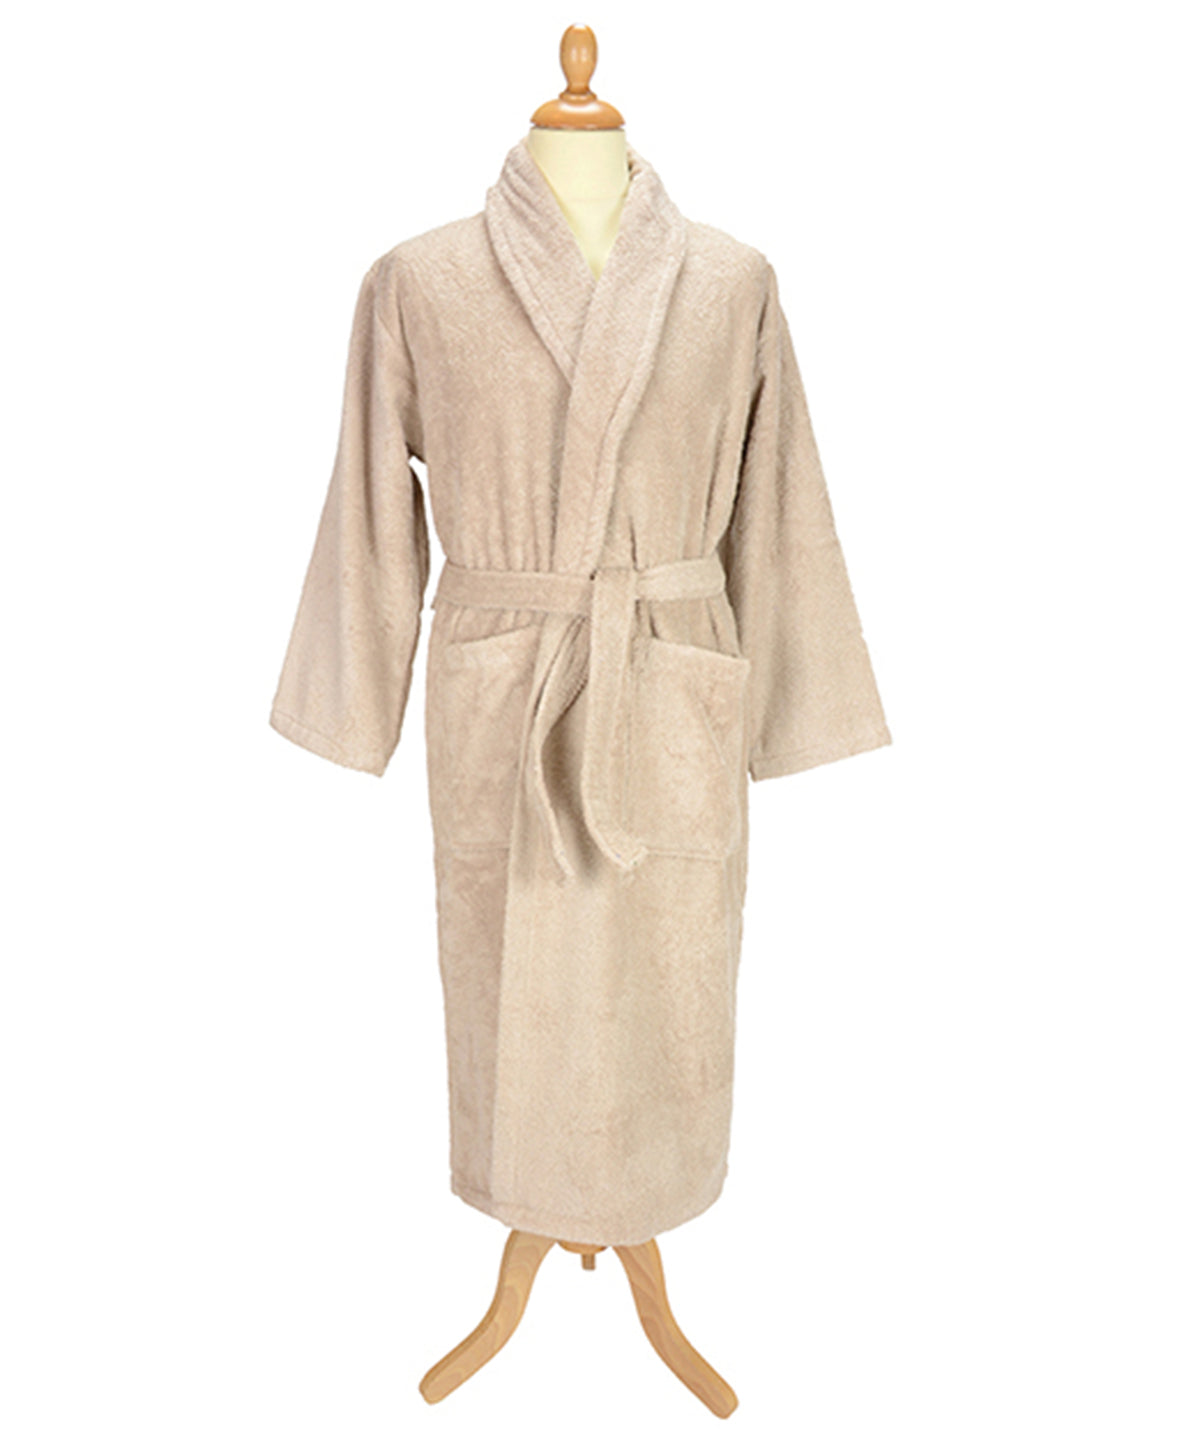 Personalised Robes - Dark Green A&R Towels ARTG® Bath robe with shawl collar